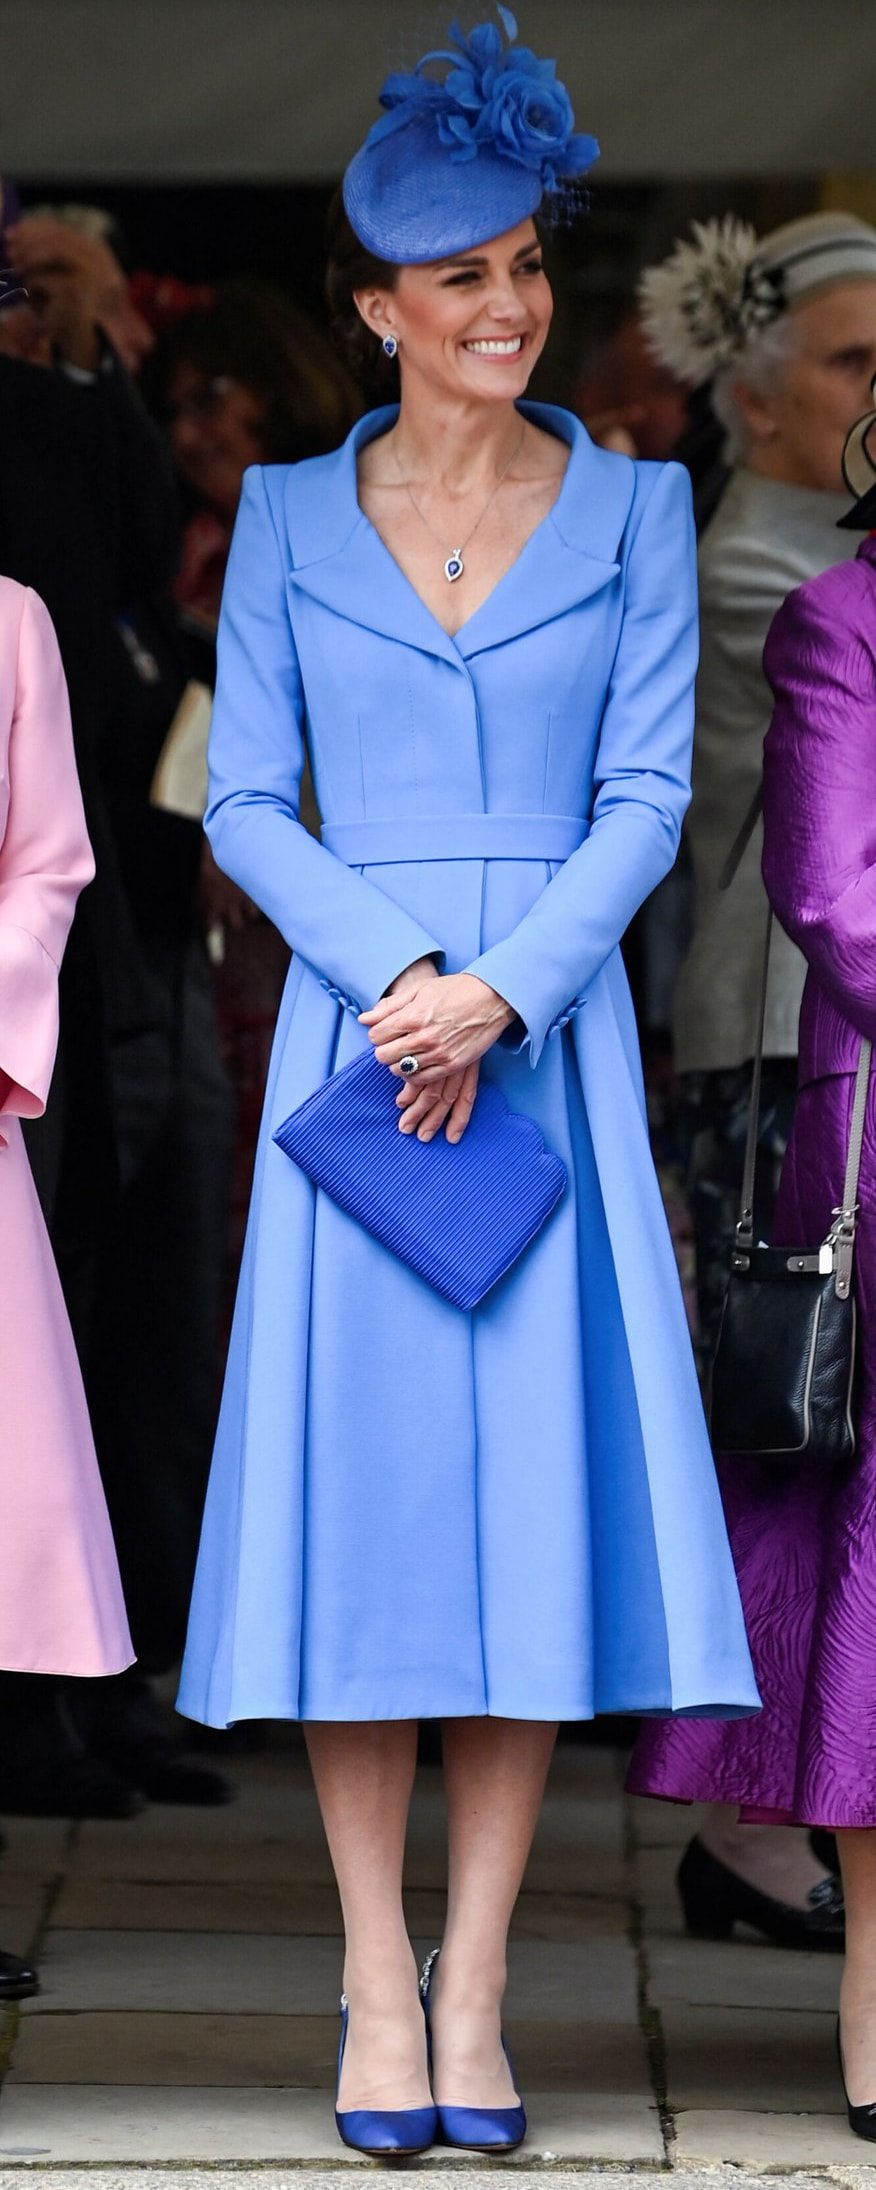 Juliette Botterill Floral Leaf Teardrop Hat in Blue as seen on Kate Middleton, The Duchess of Cambridge.